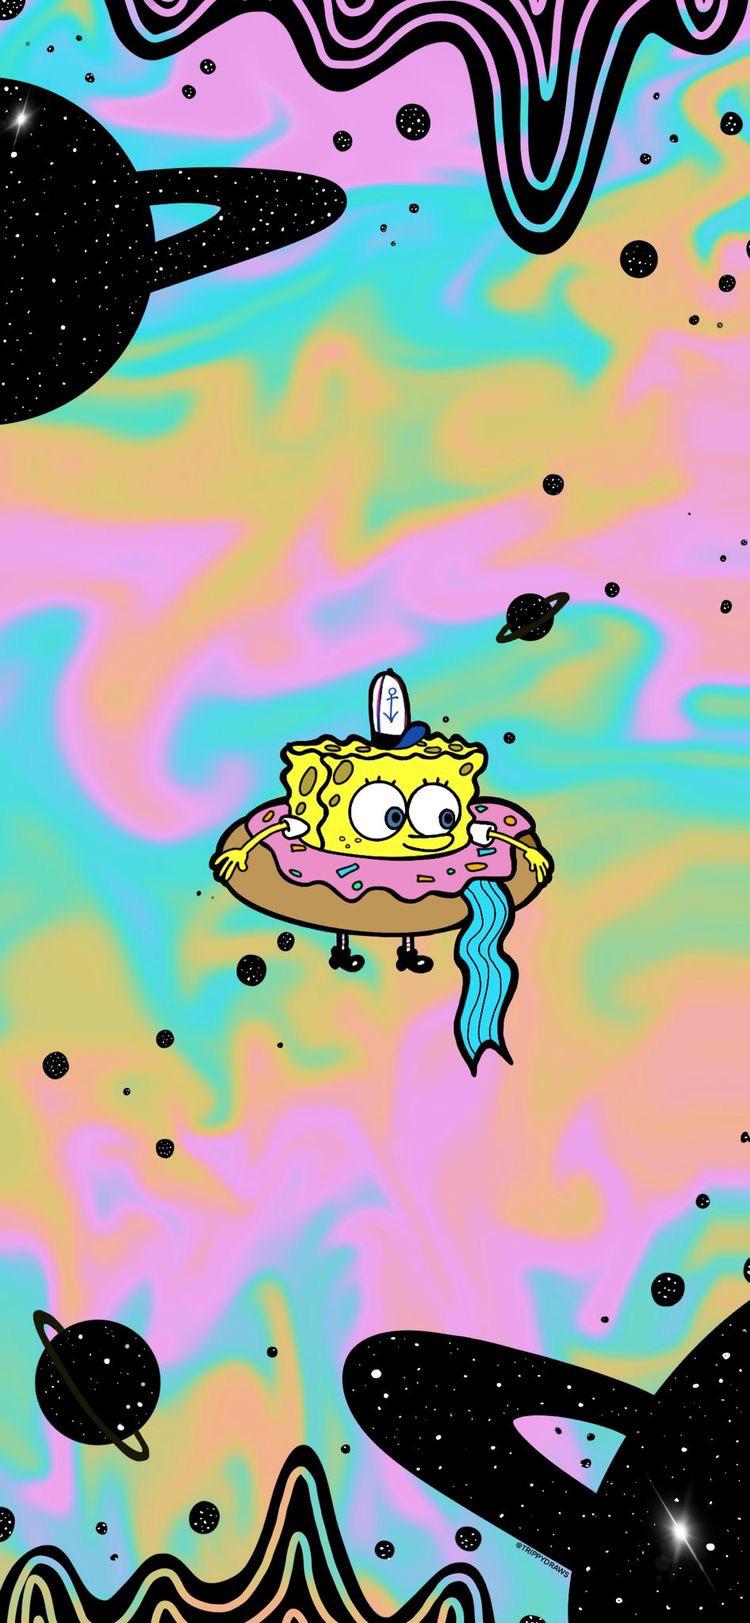 Drippy looking SpongeBob background